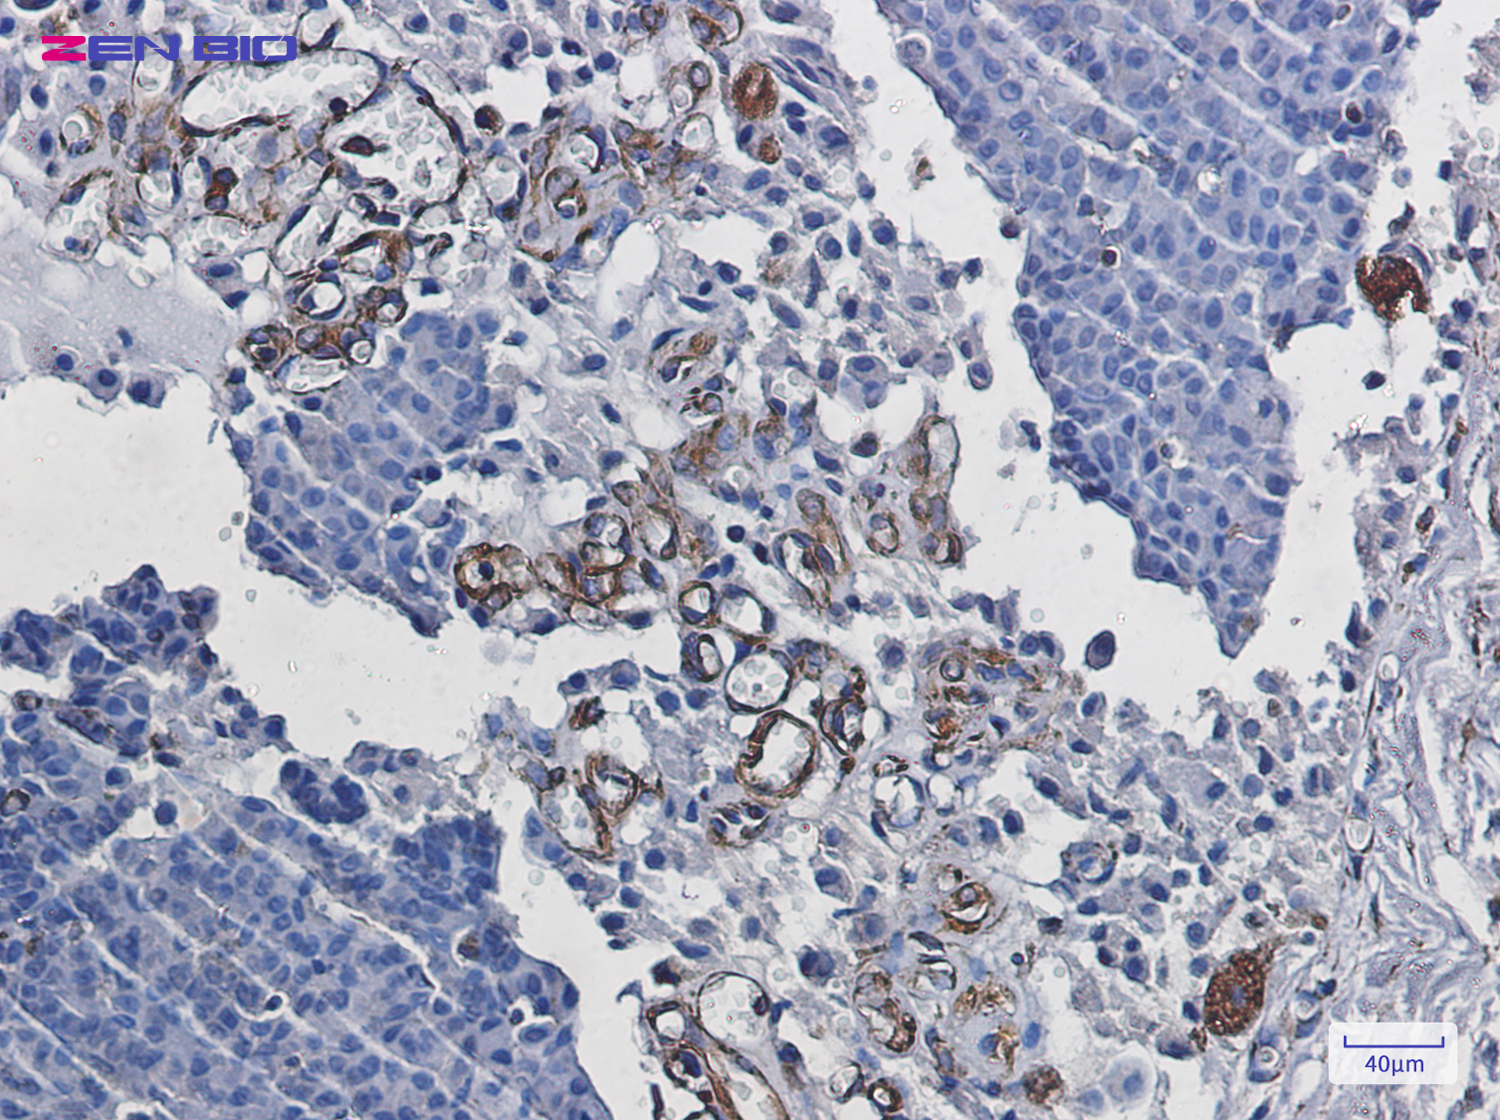 Immunohistochemistry of Staufen in paraffin-embedded Human breast cancer tissue using Staufen Rabbit pAb at dilution 1/50